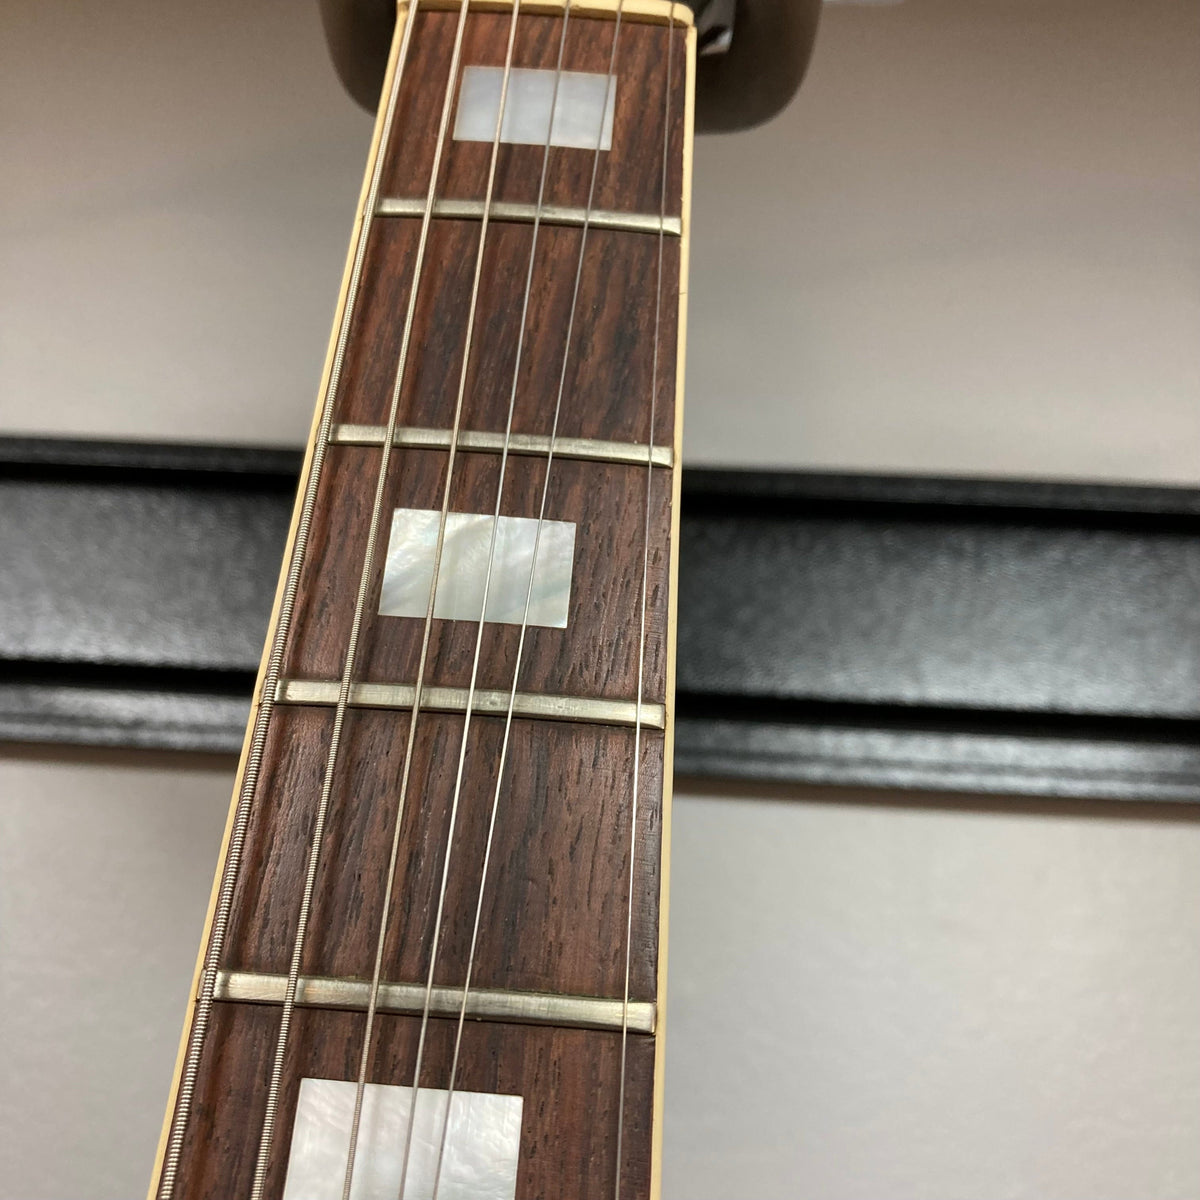 1975 Gibson SG Standard w/Case